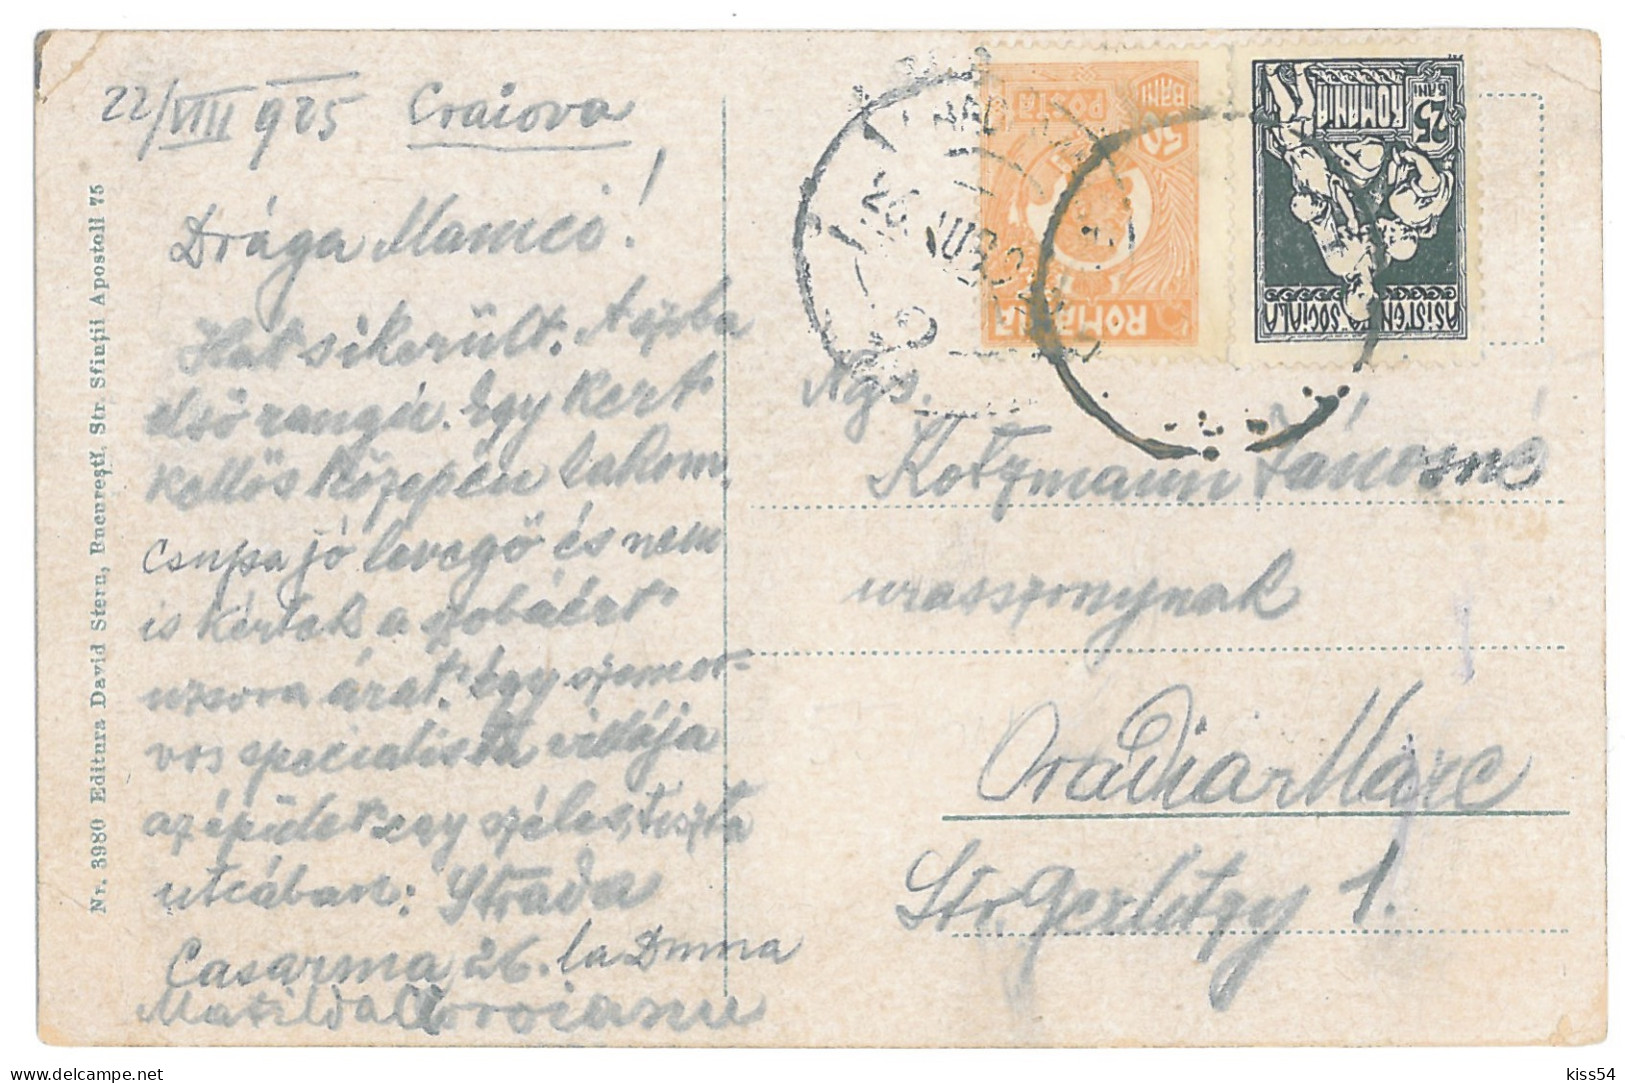 RO 45 - 14733 CRAIOVA, Market, Romania - Old Postcard - Used - 1925 - Romania